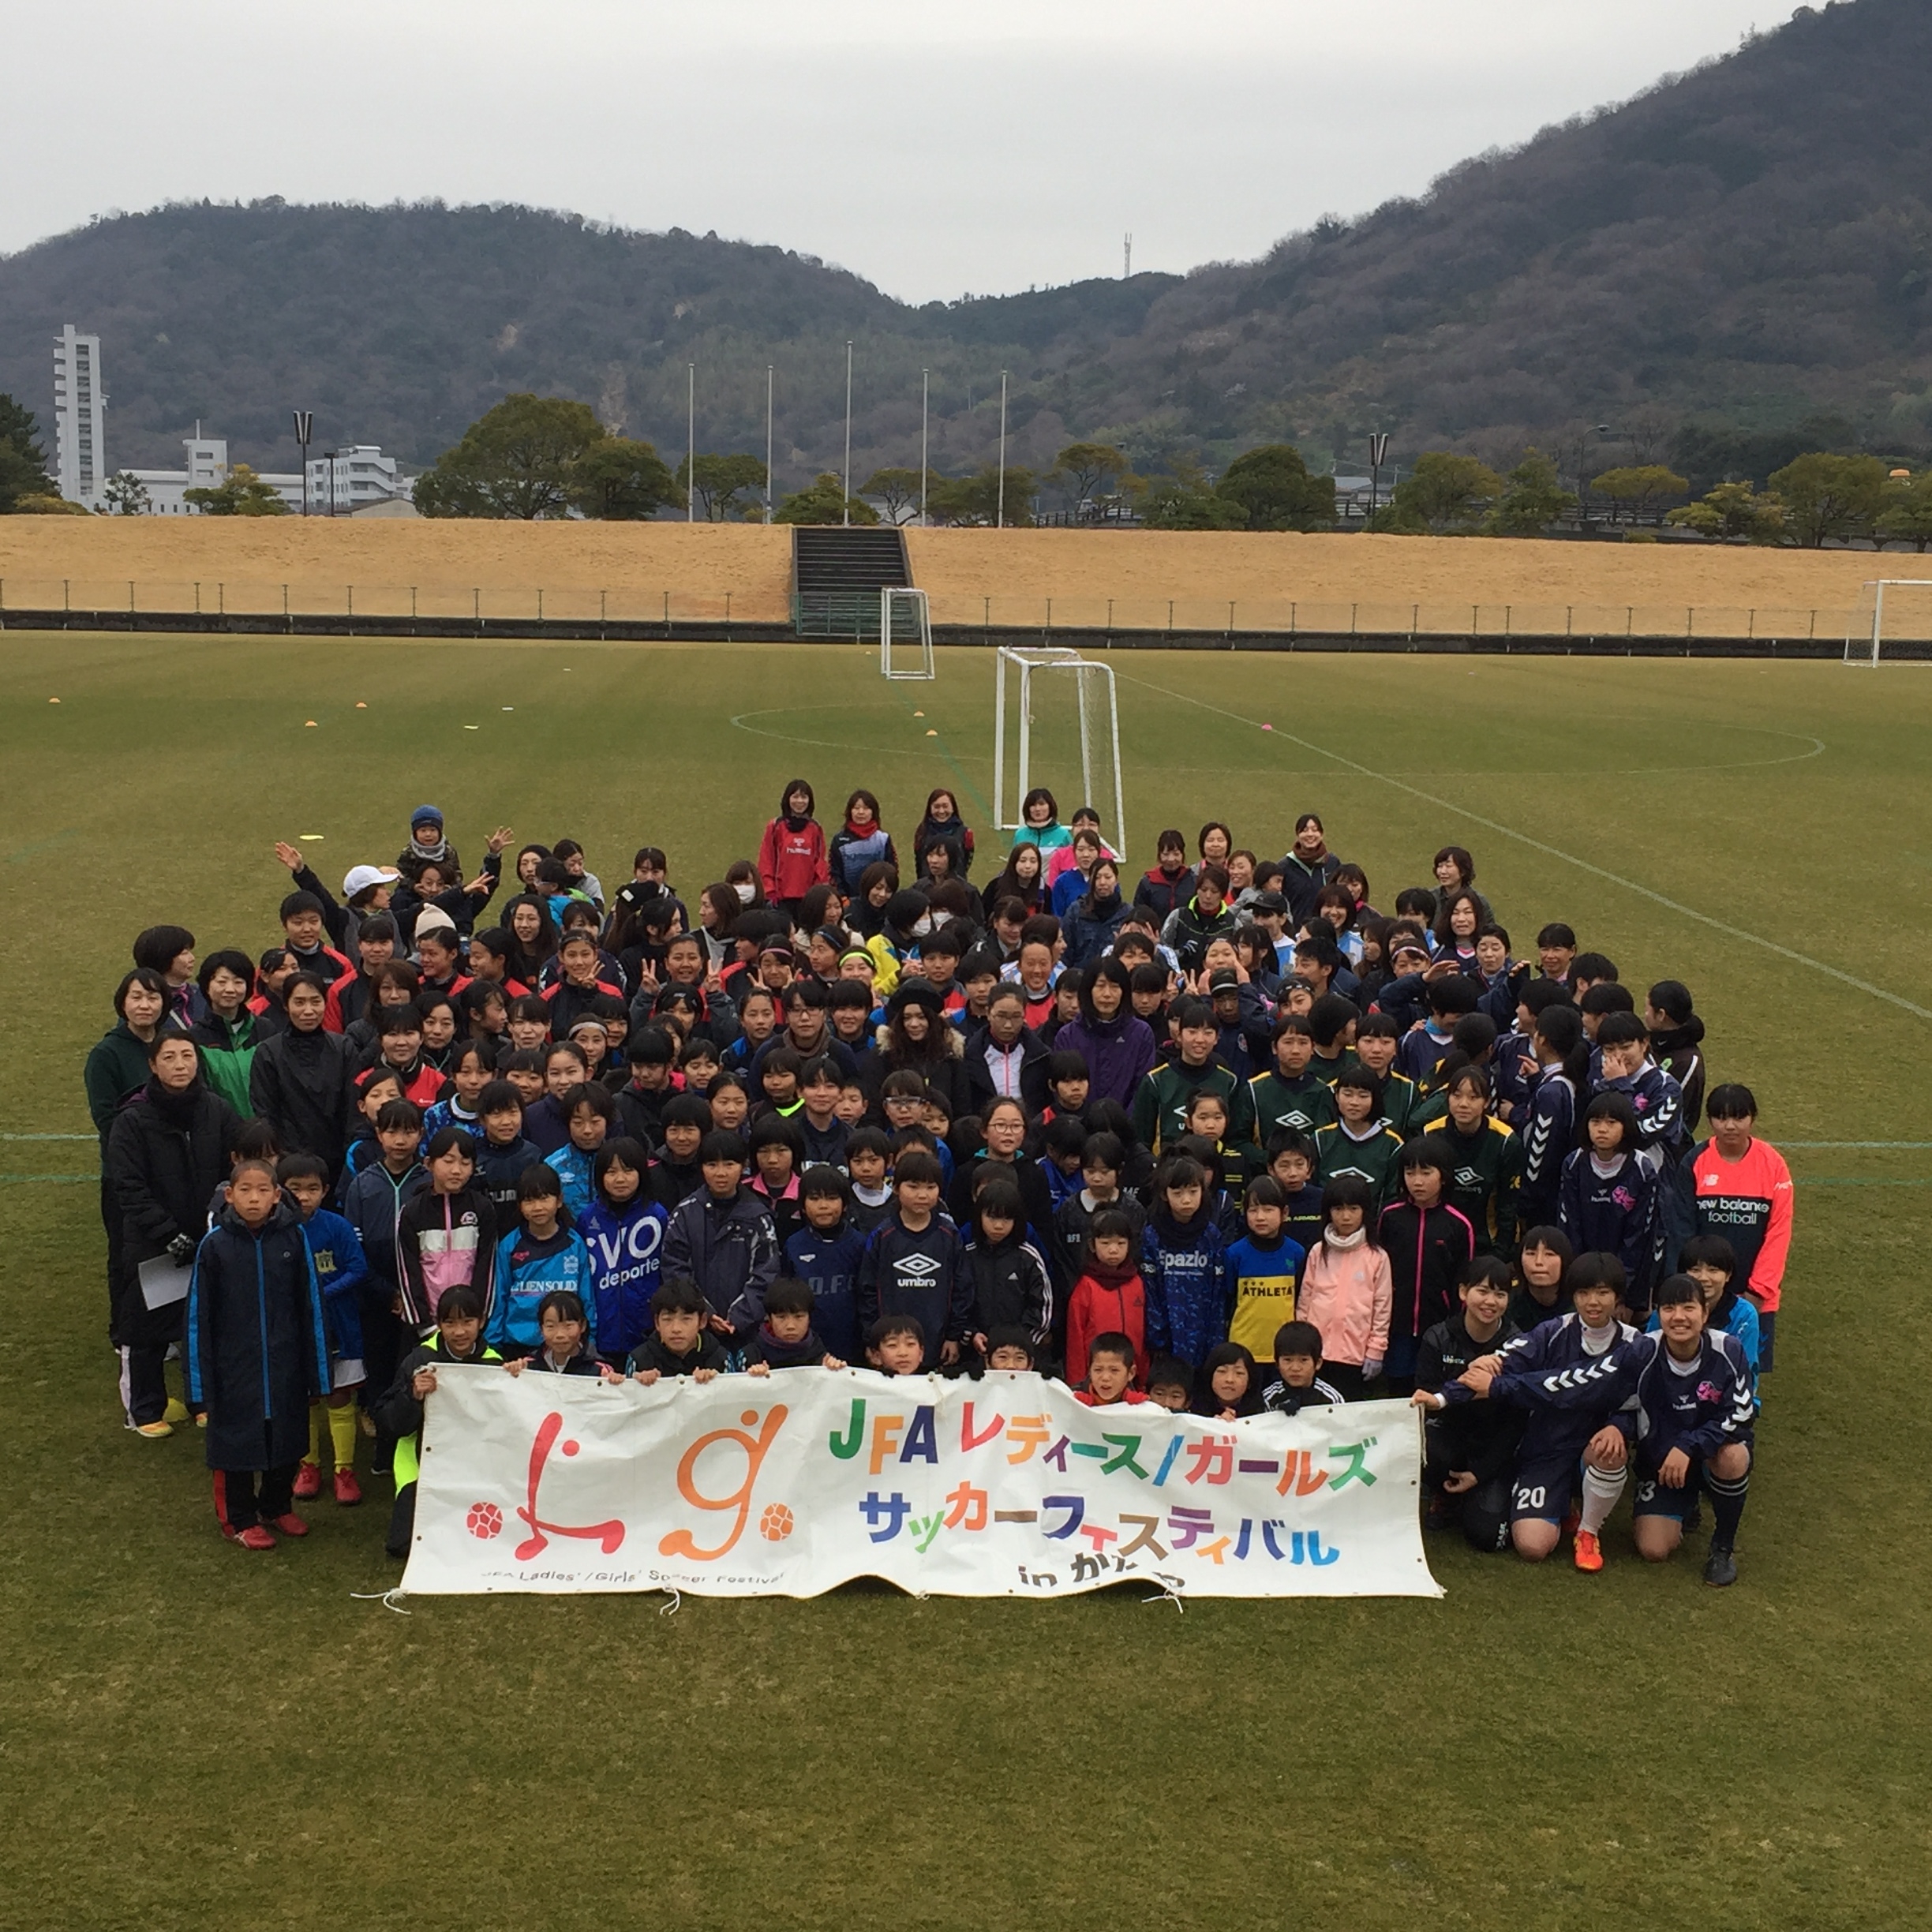 JFAレディース／ガールズサッカーフェスティバル in香川県総合運動公園